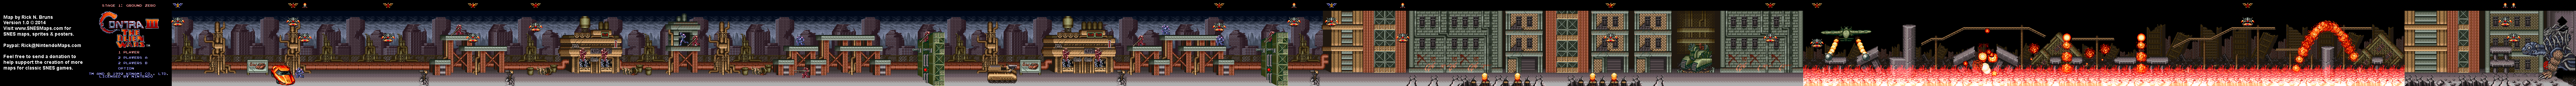 Contra 3: The Alien Wars - Stagel 1 Ground Zero - Super Nintendo SNES Map